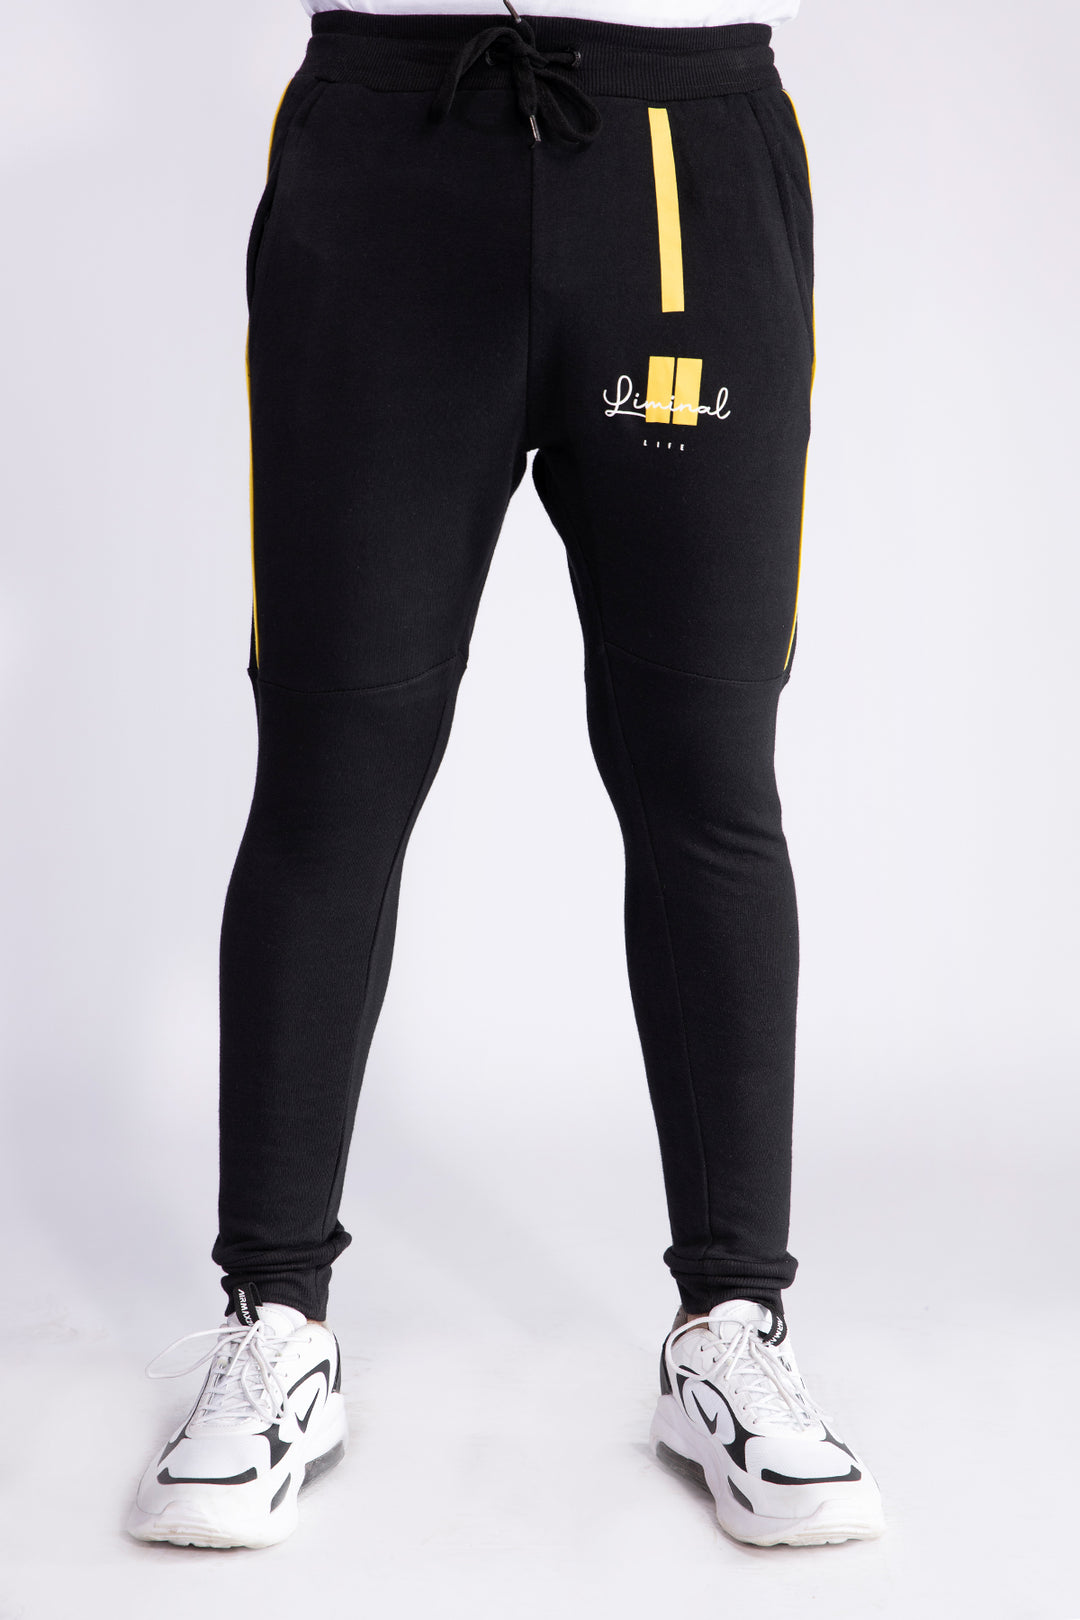 Liminal Black Jog Pants - W21 - MTR026R